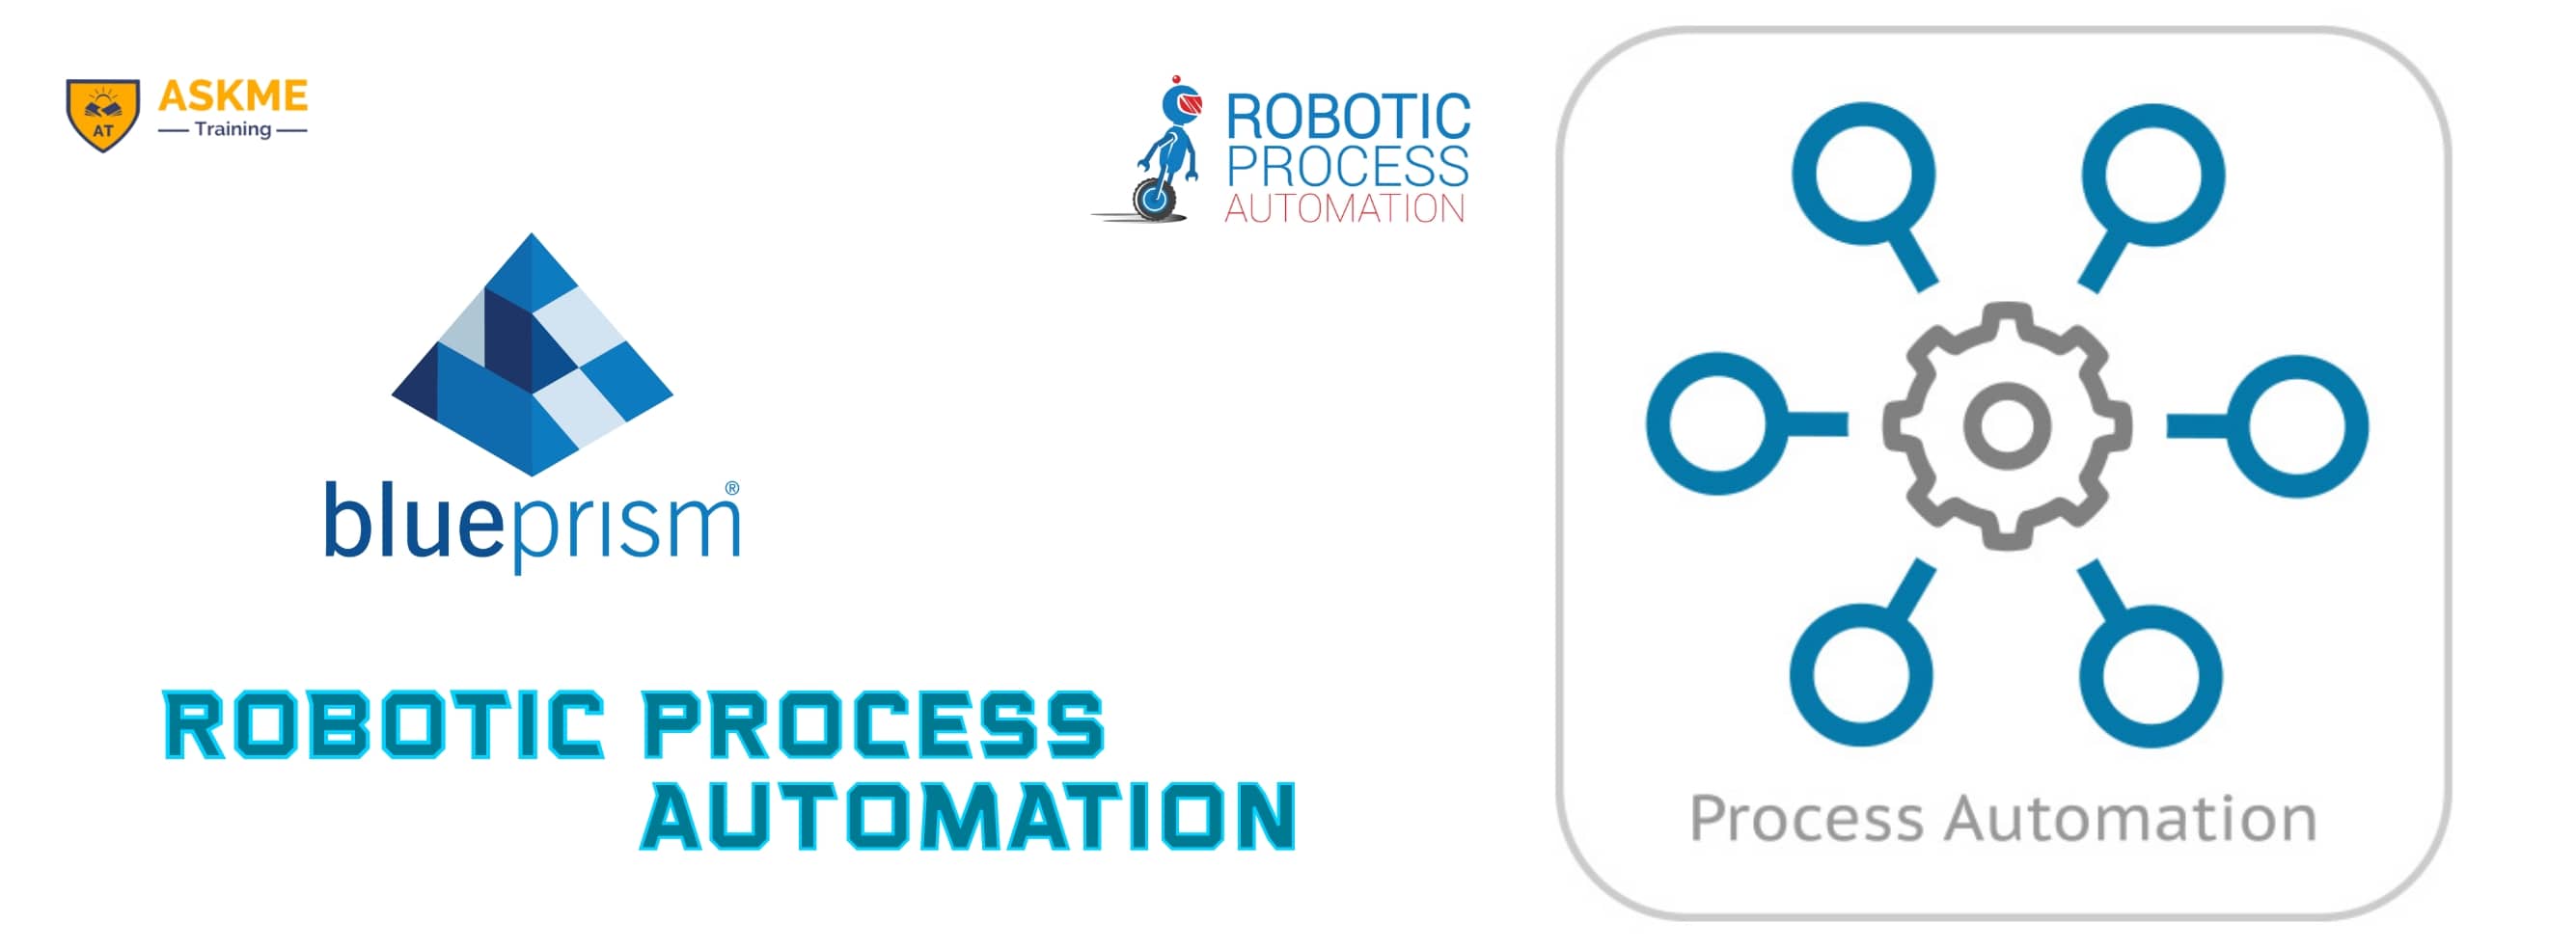 Robotics Process Automation - Blueprism